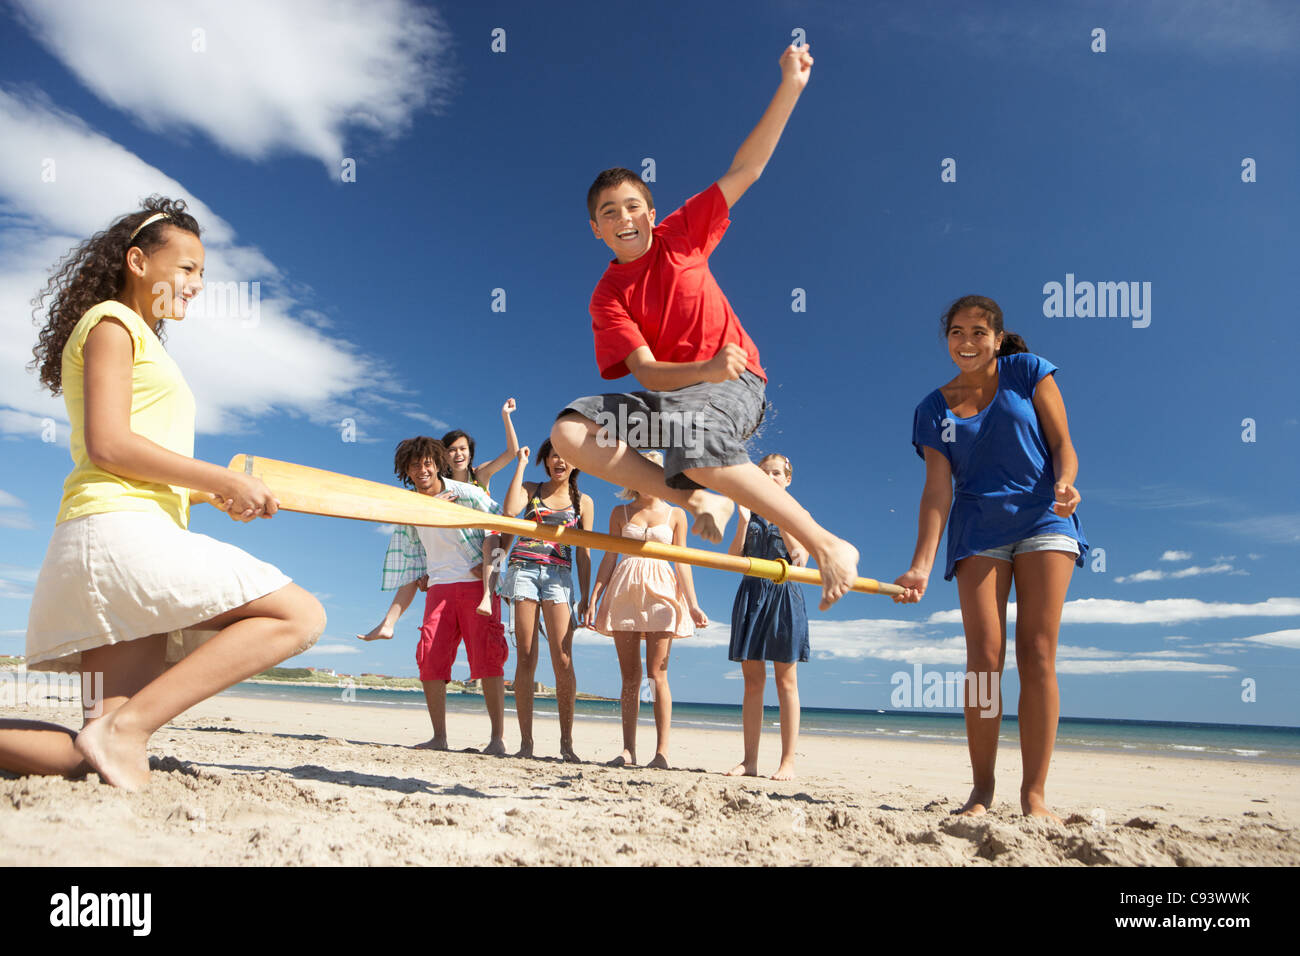 Teenagers having fun on beach Stock Photo